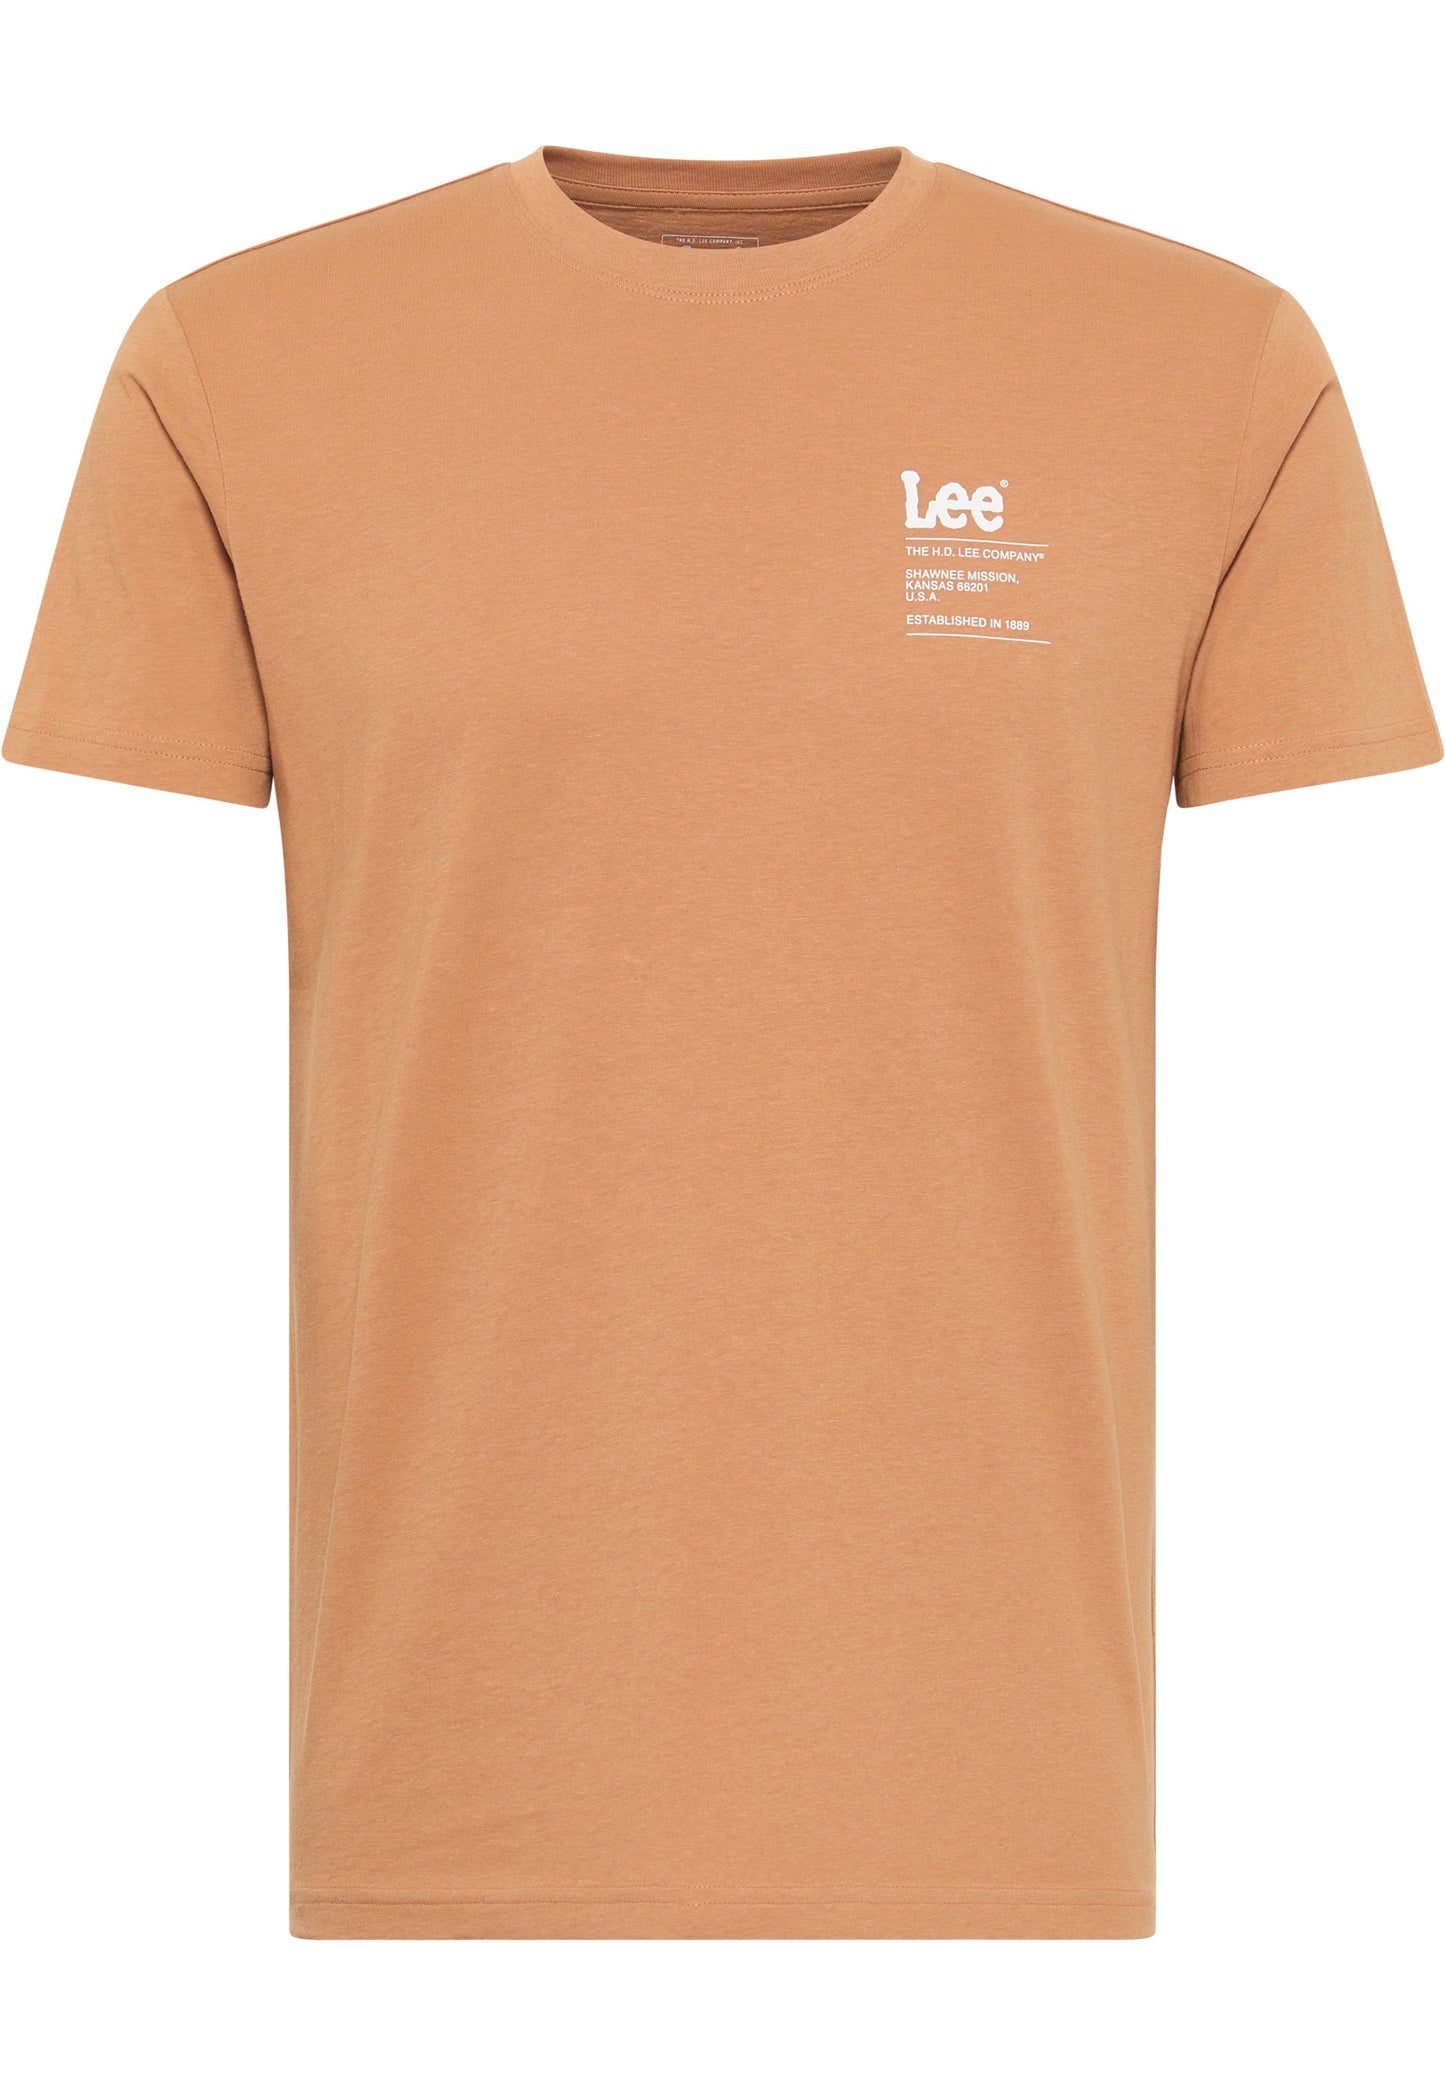 Lee Small Logo Tee Cider Shirt